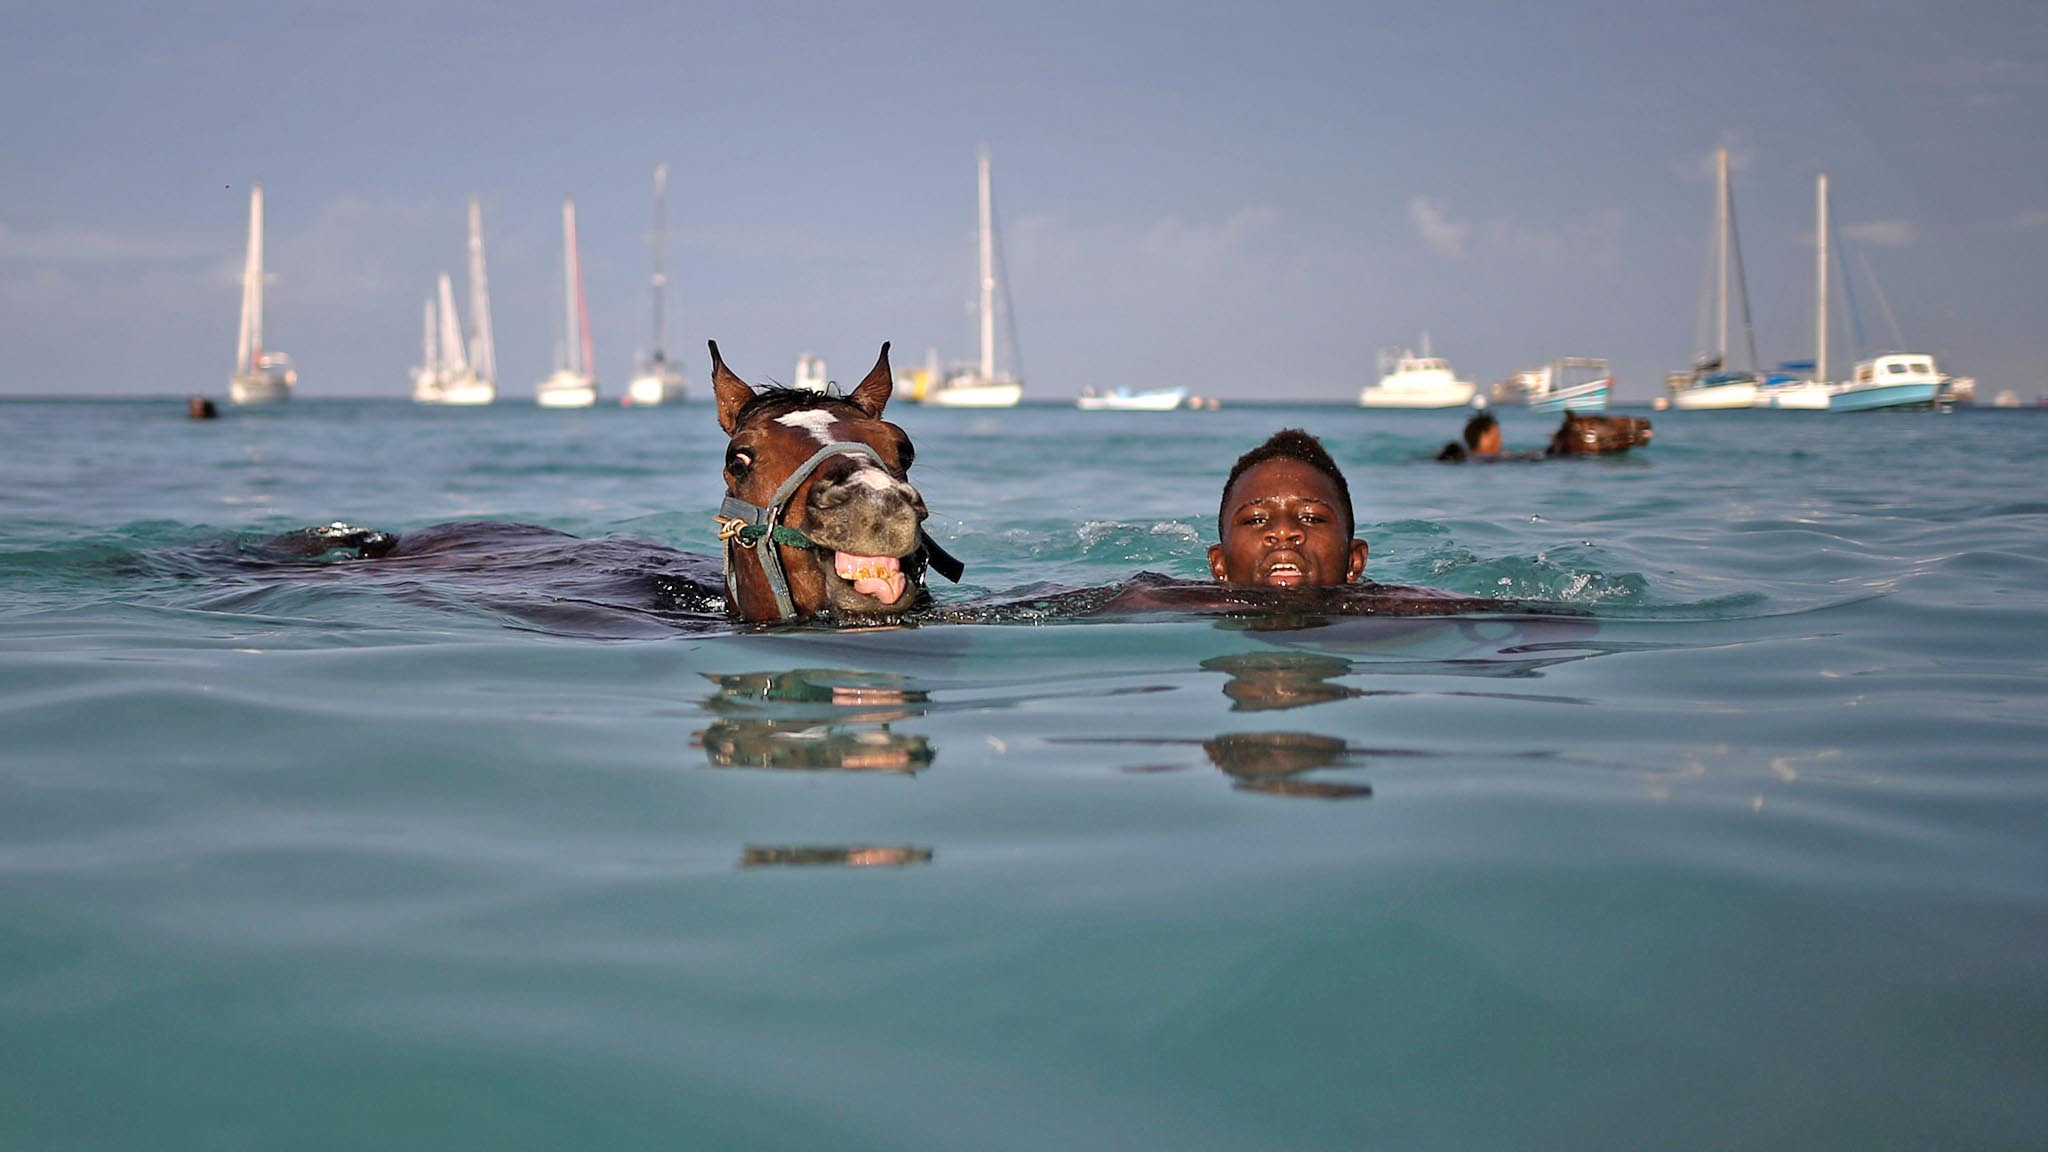 A handler swims with a horse from the Garrison Savannah in the Caribbean Sea near Bridgetown, Barbados